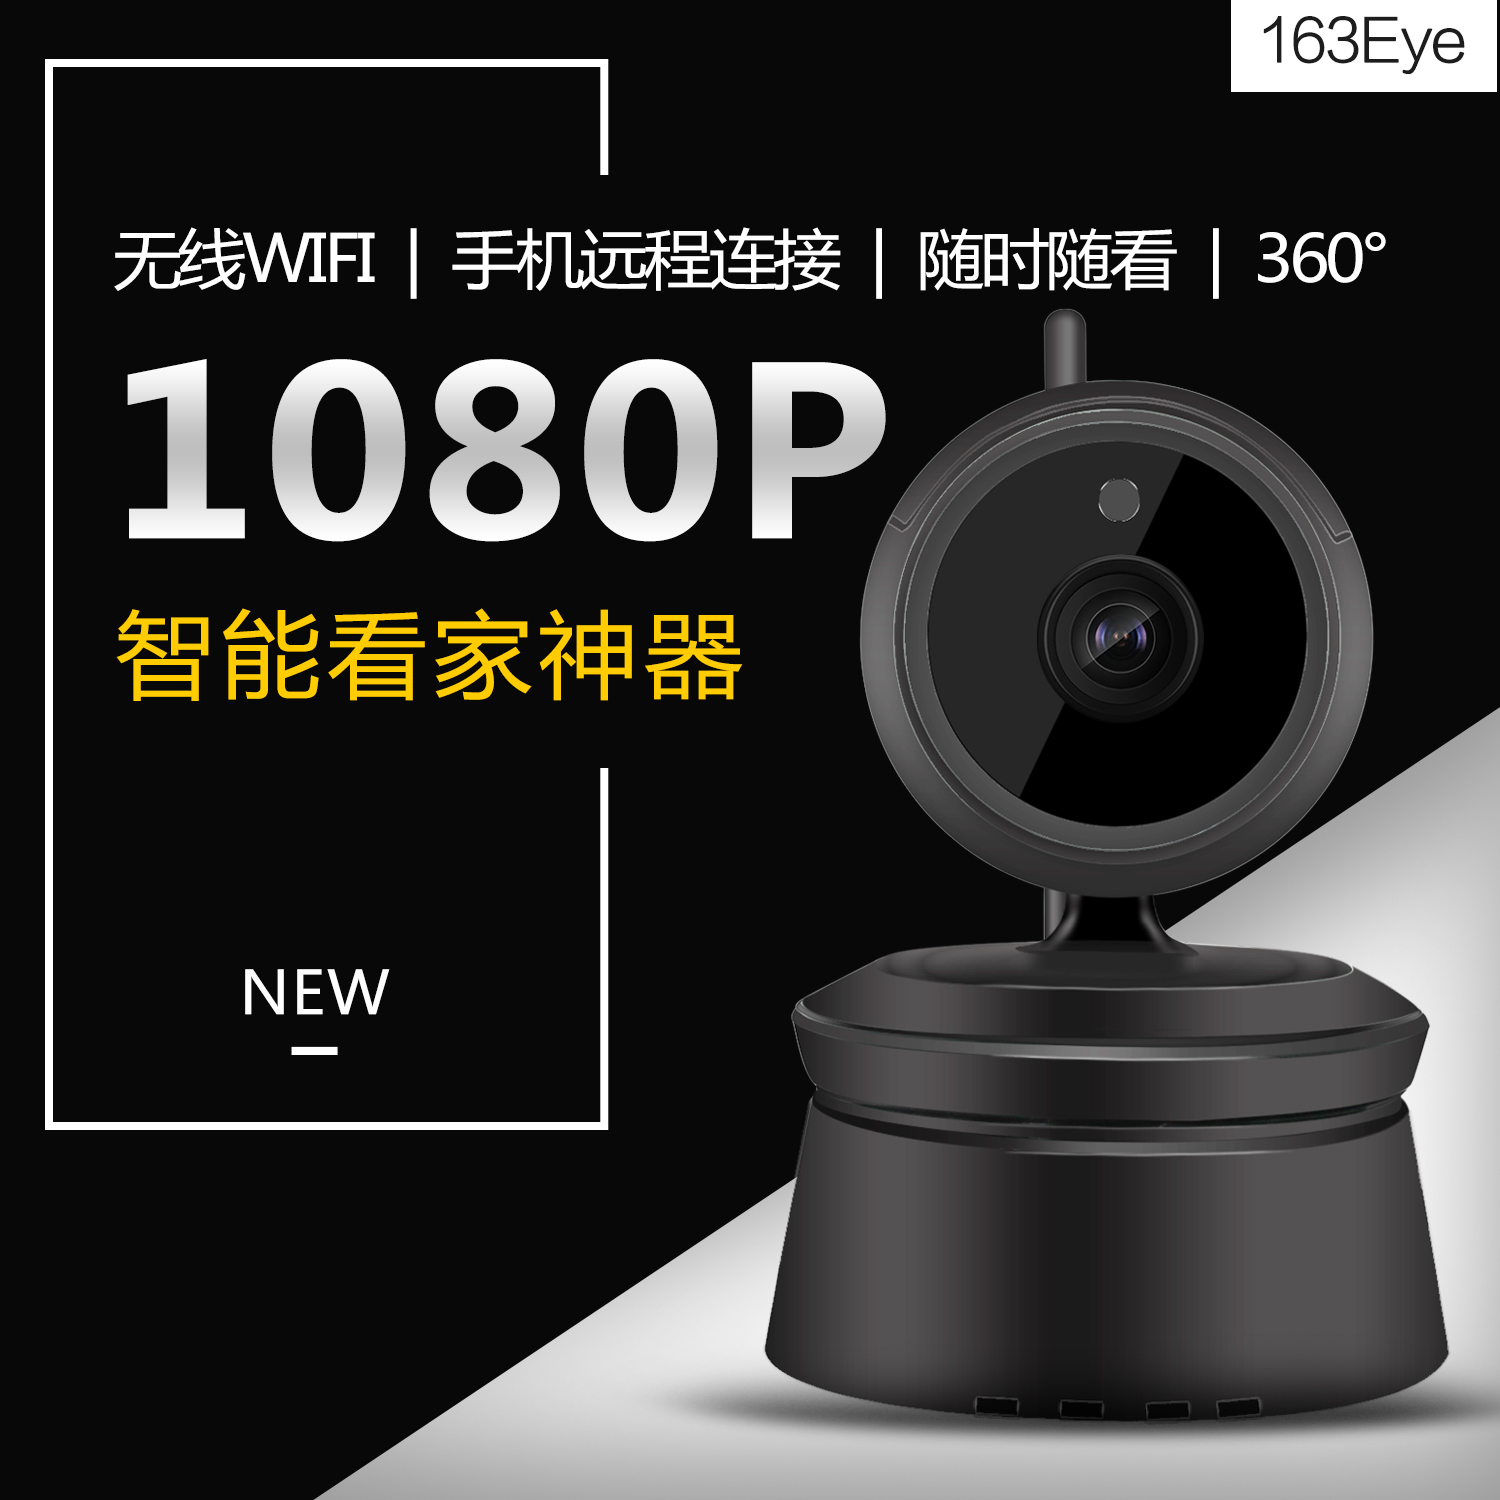 1080P smart housekeeping surveillance PTZ rotating wifi camera